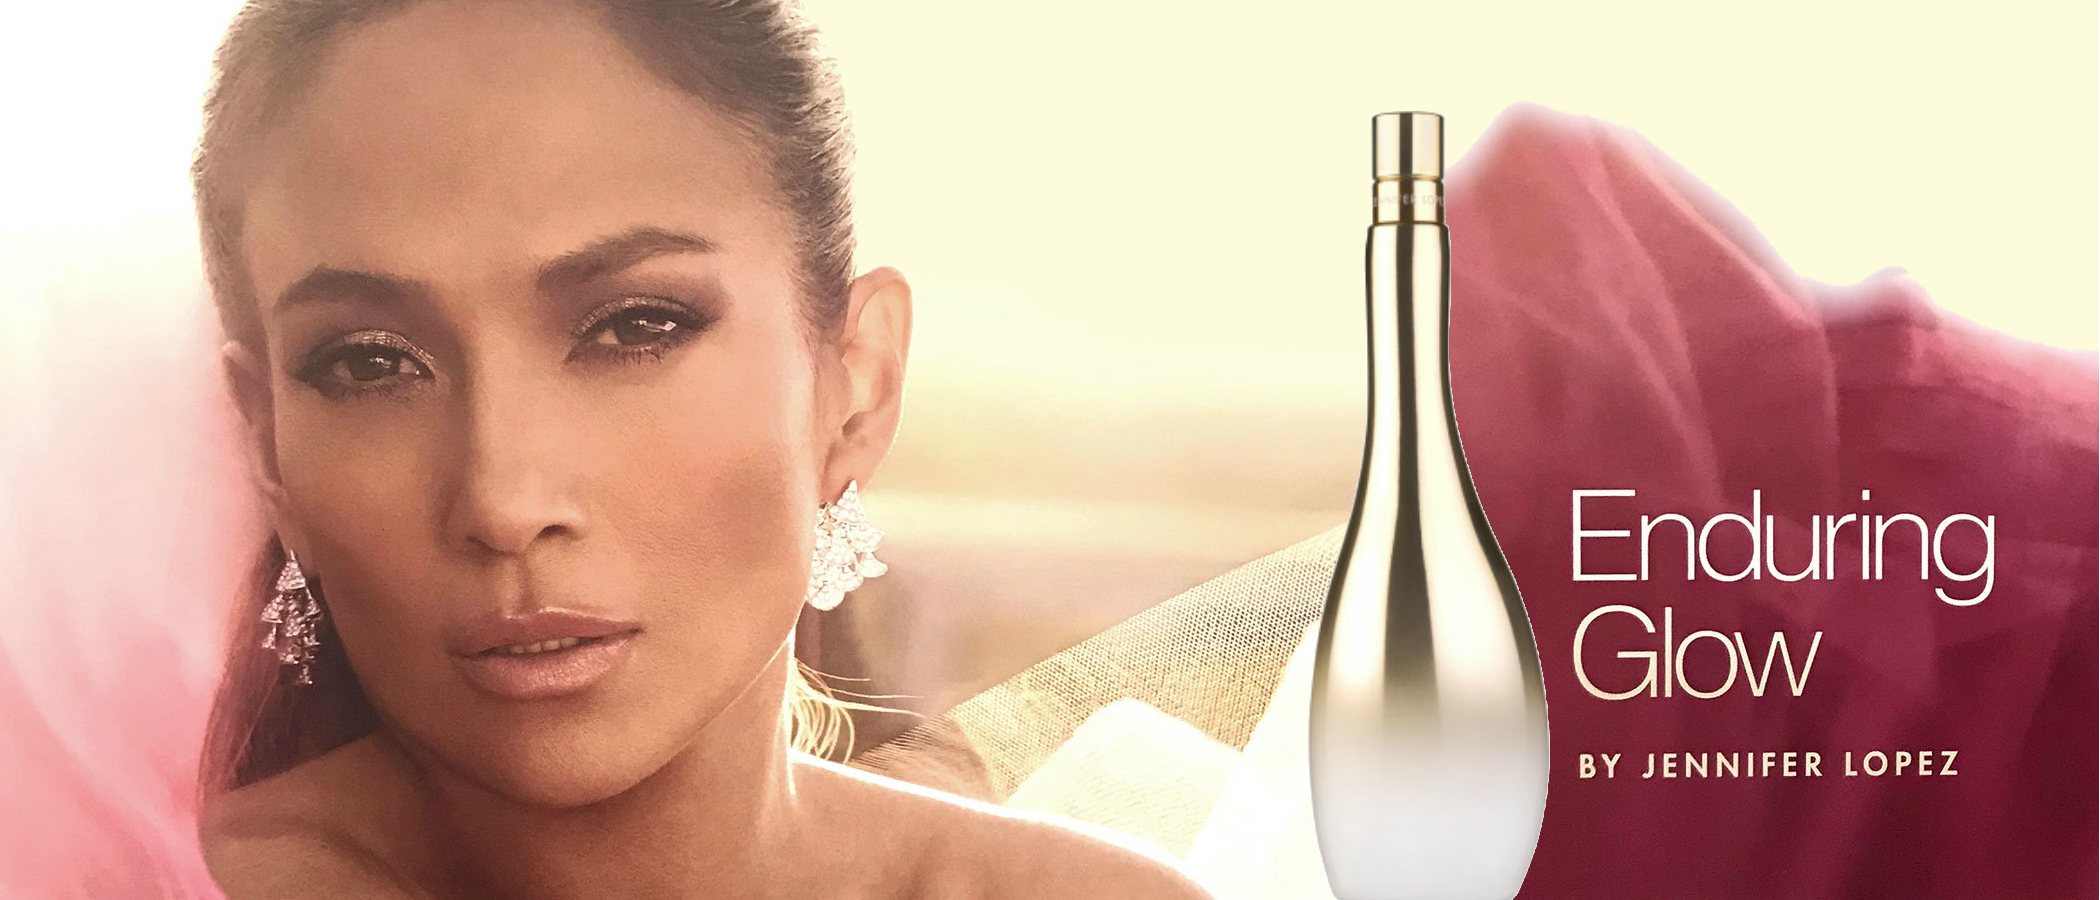 'Enduring Glow', la nueva fragancia femenina de Jennifer Lopez